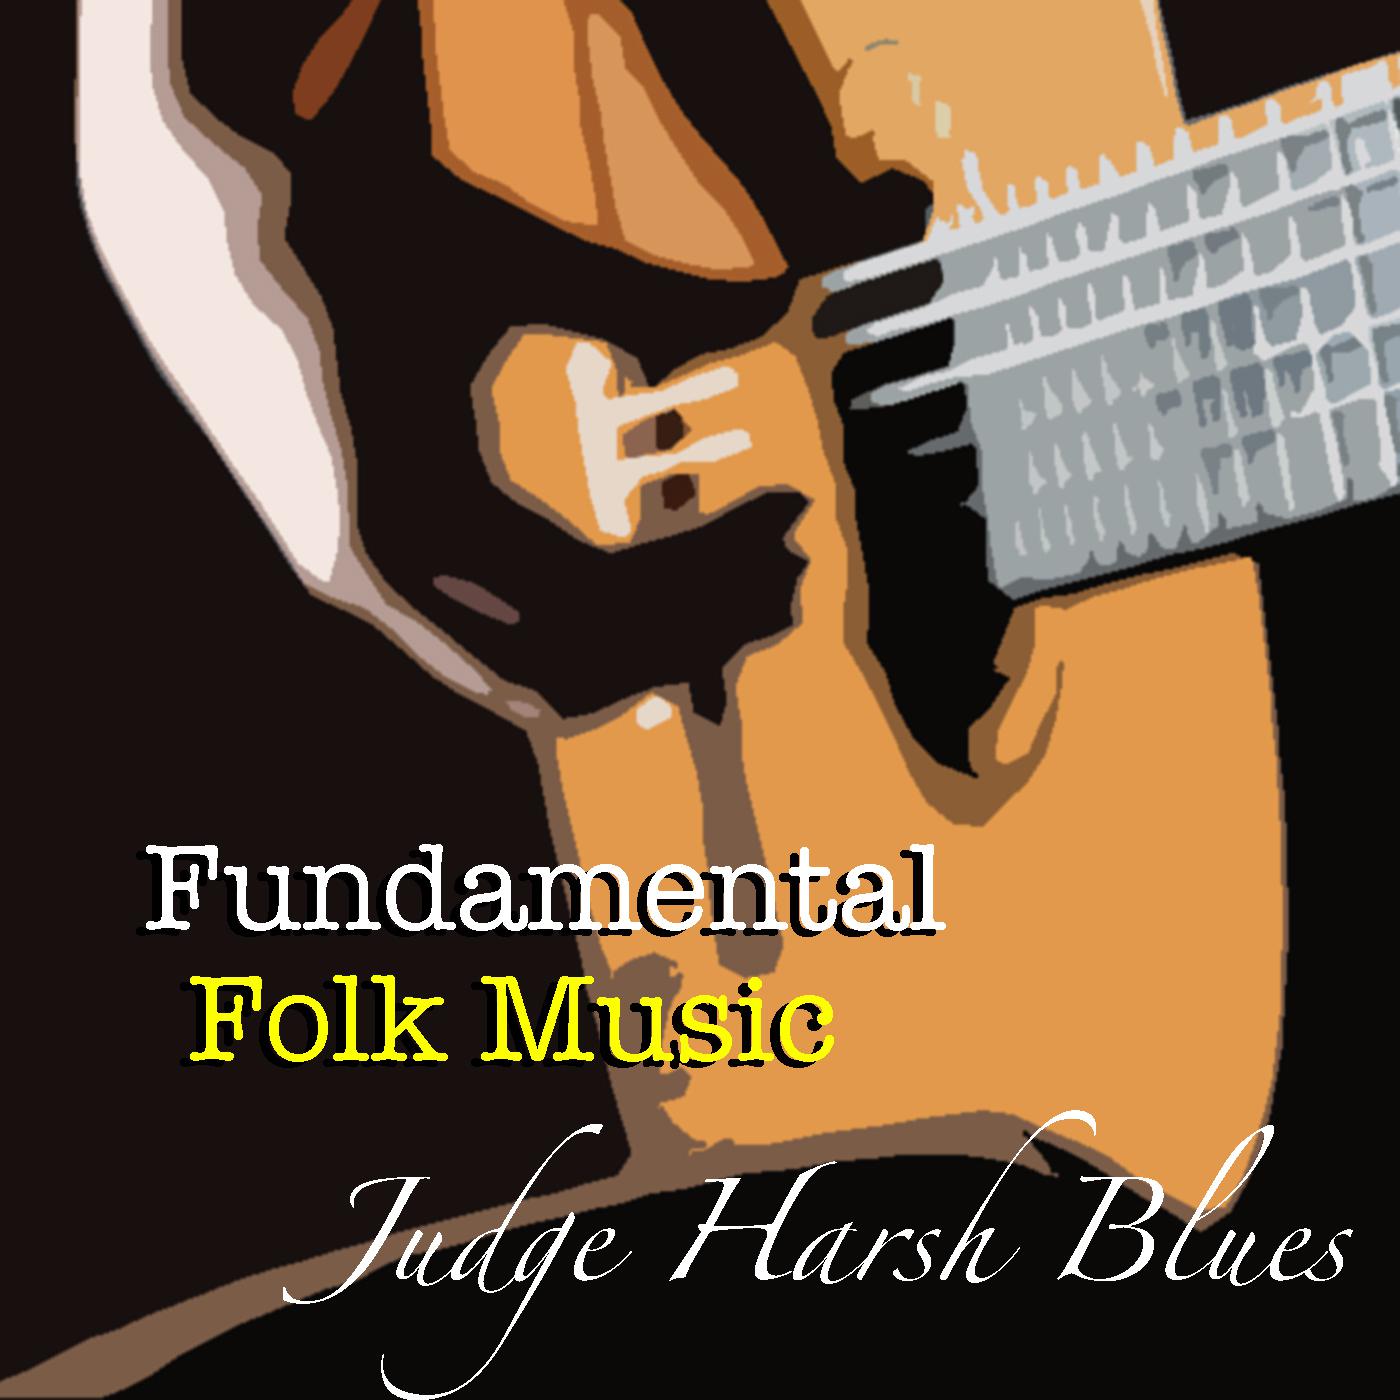 Judge Harsh Blues Fundamental Folk Music